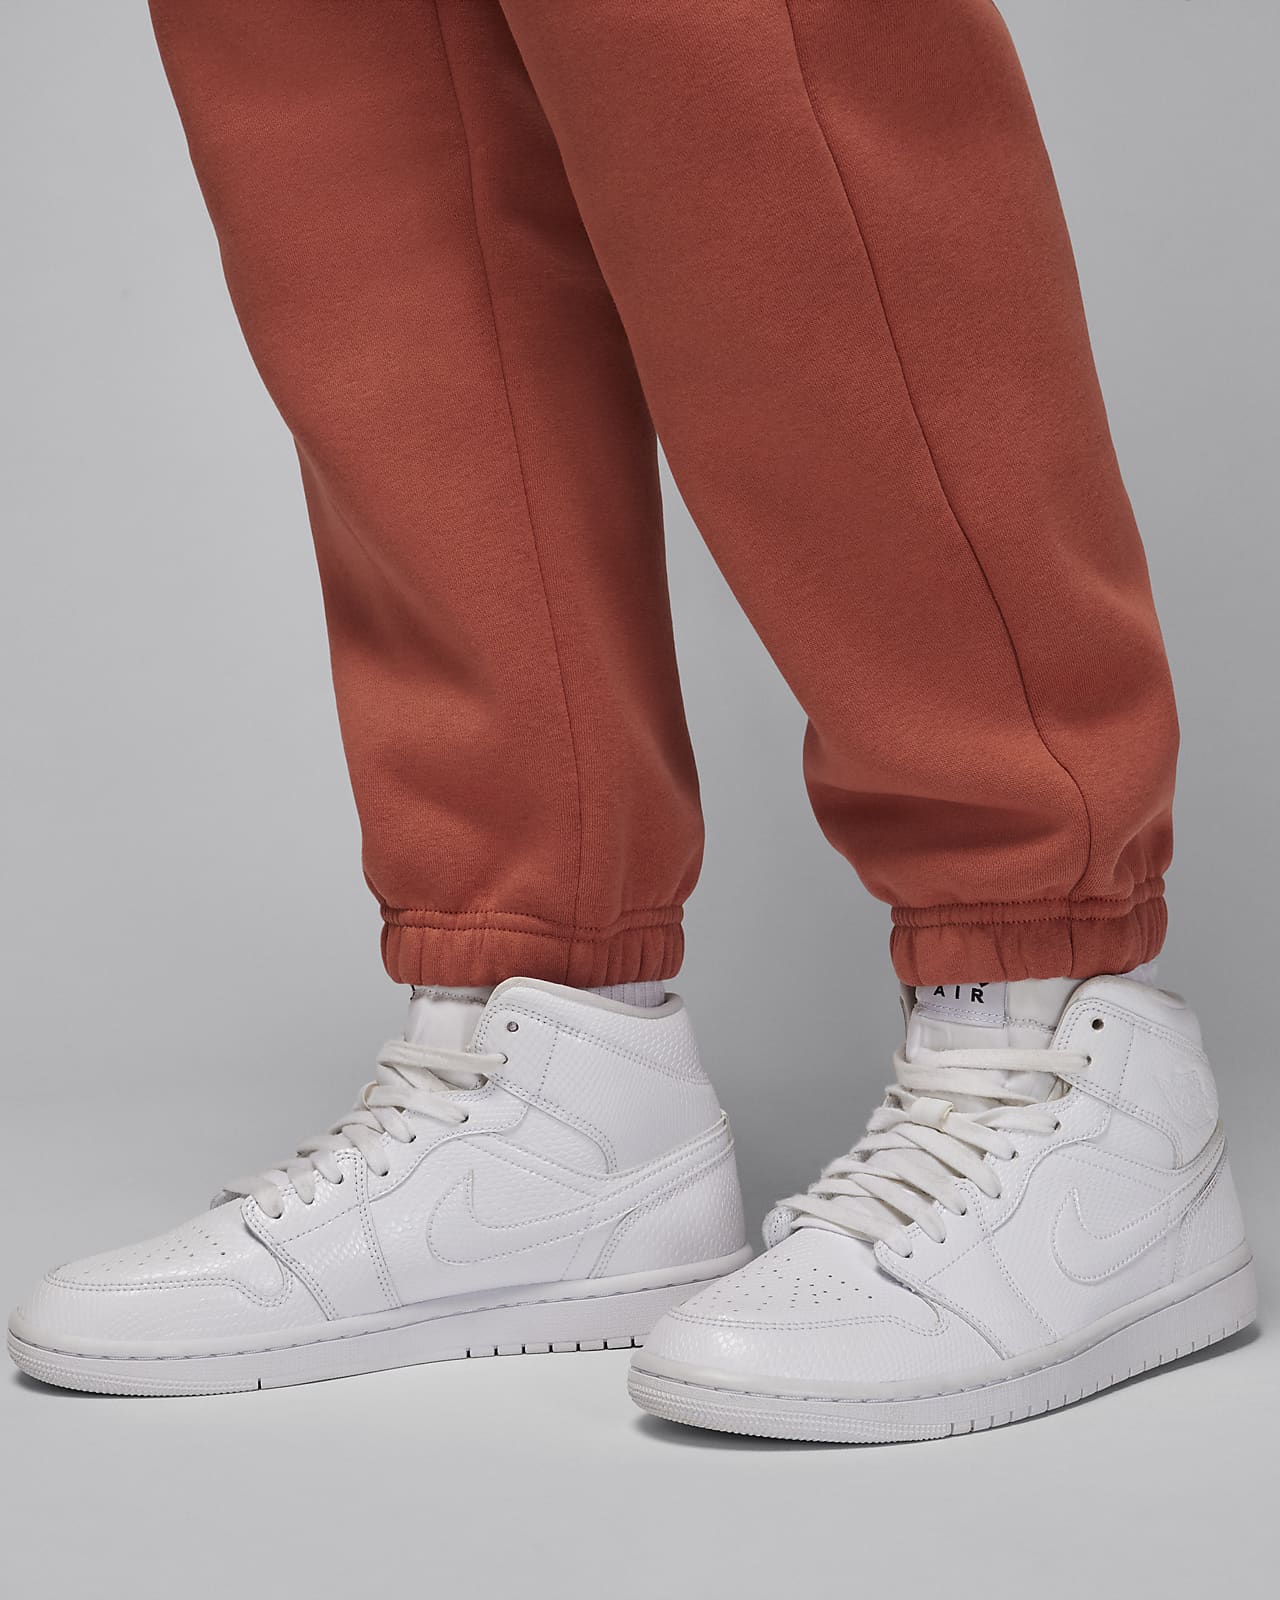 Nike Air Jordan Brooklyn Fleece Men's Pants, Black/Black/White, X-Large :  : Clothing, Shoes & Accessories